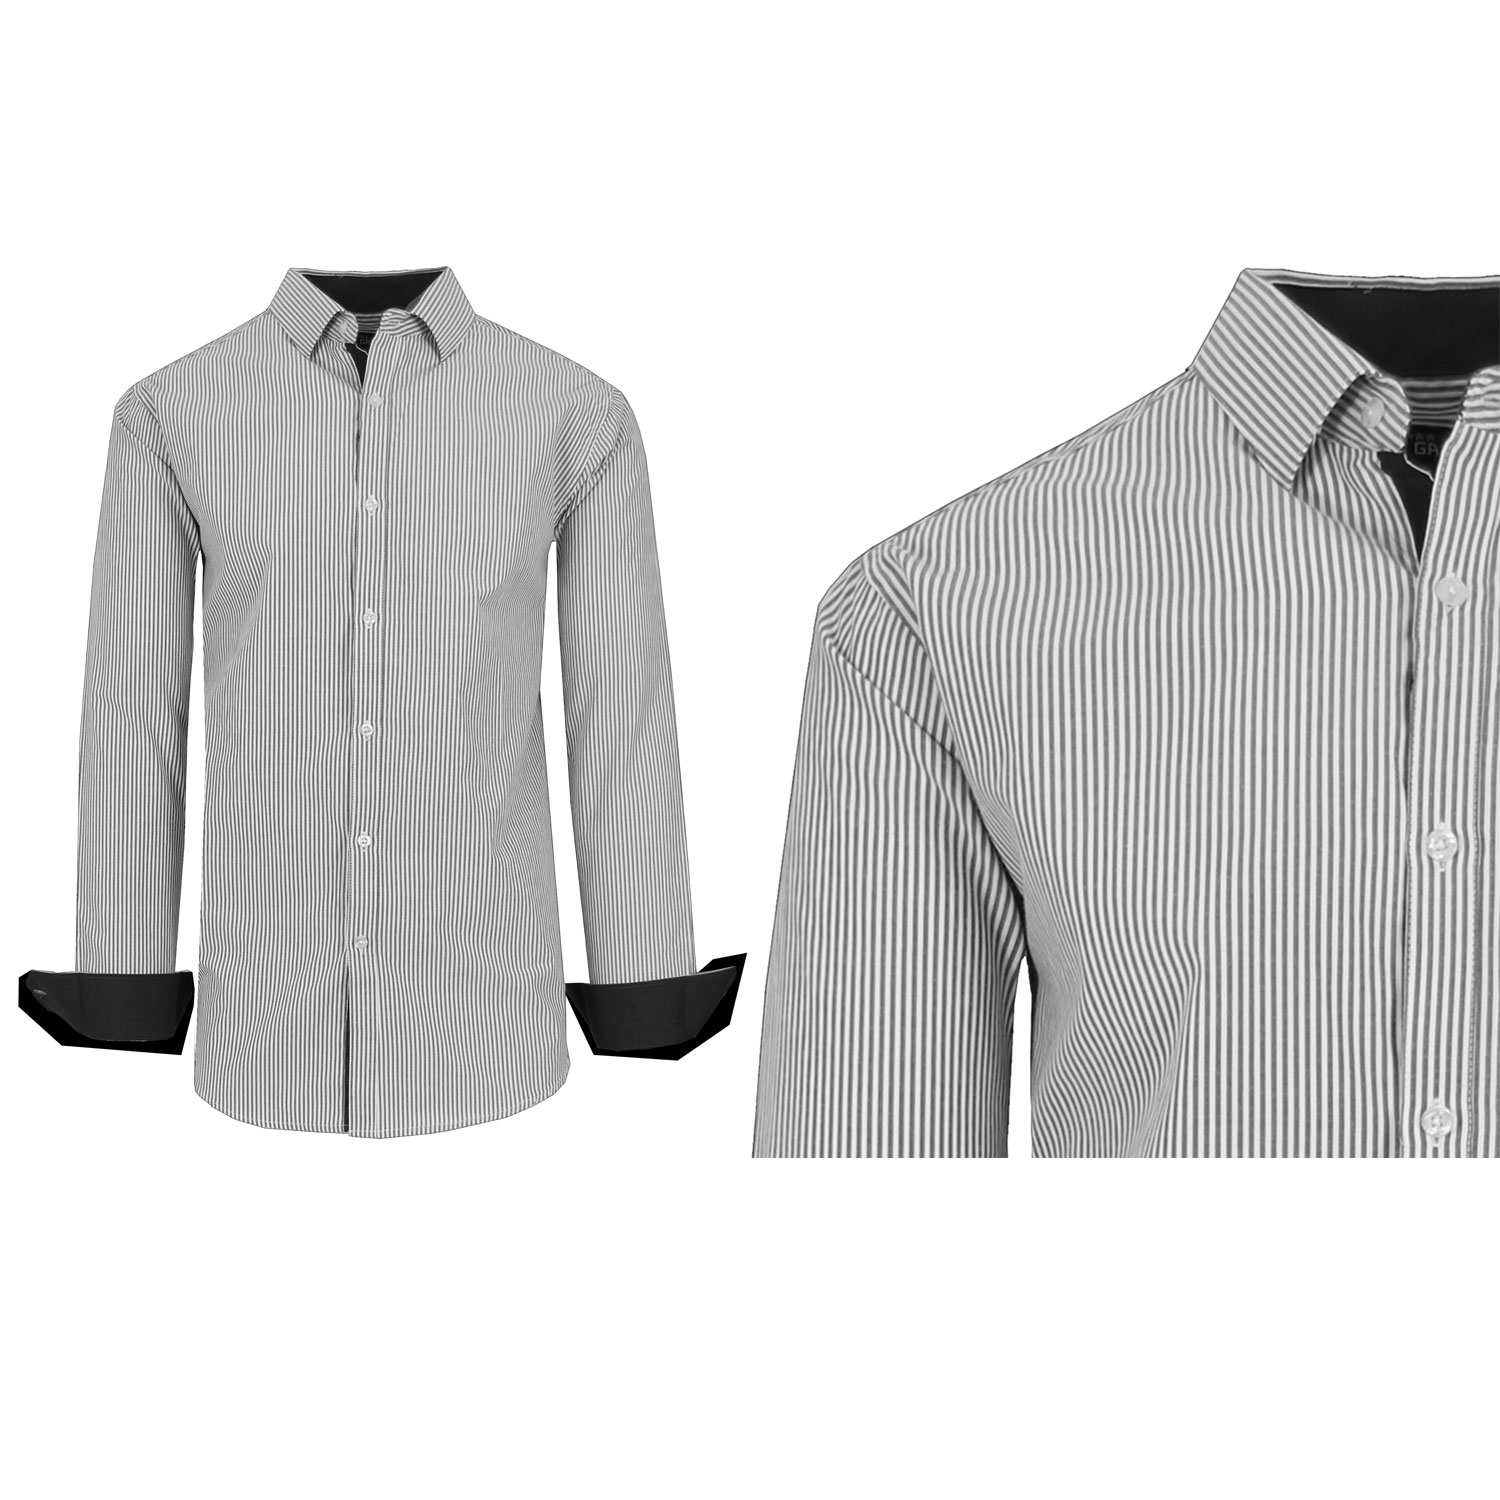 Men's Long Sleeve Slim Fitting Pinstripe Pattern Dress Shirts